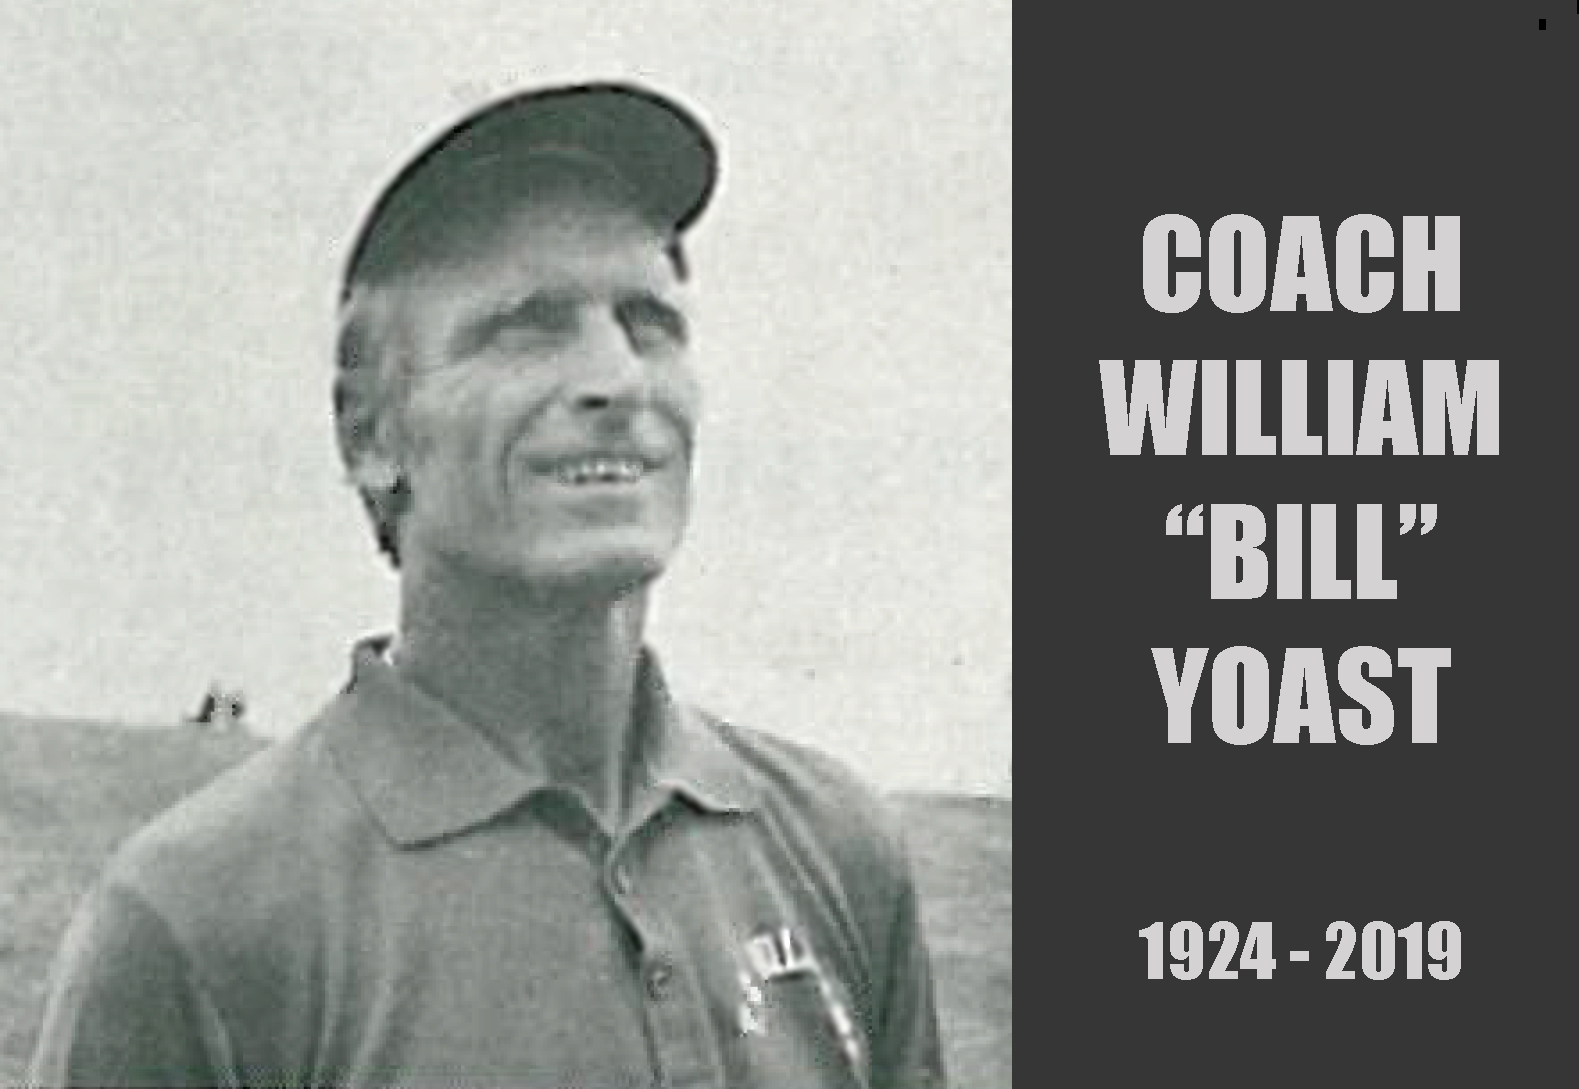 Coach William "Bill" Yoast 1924-2019